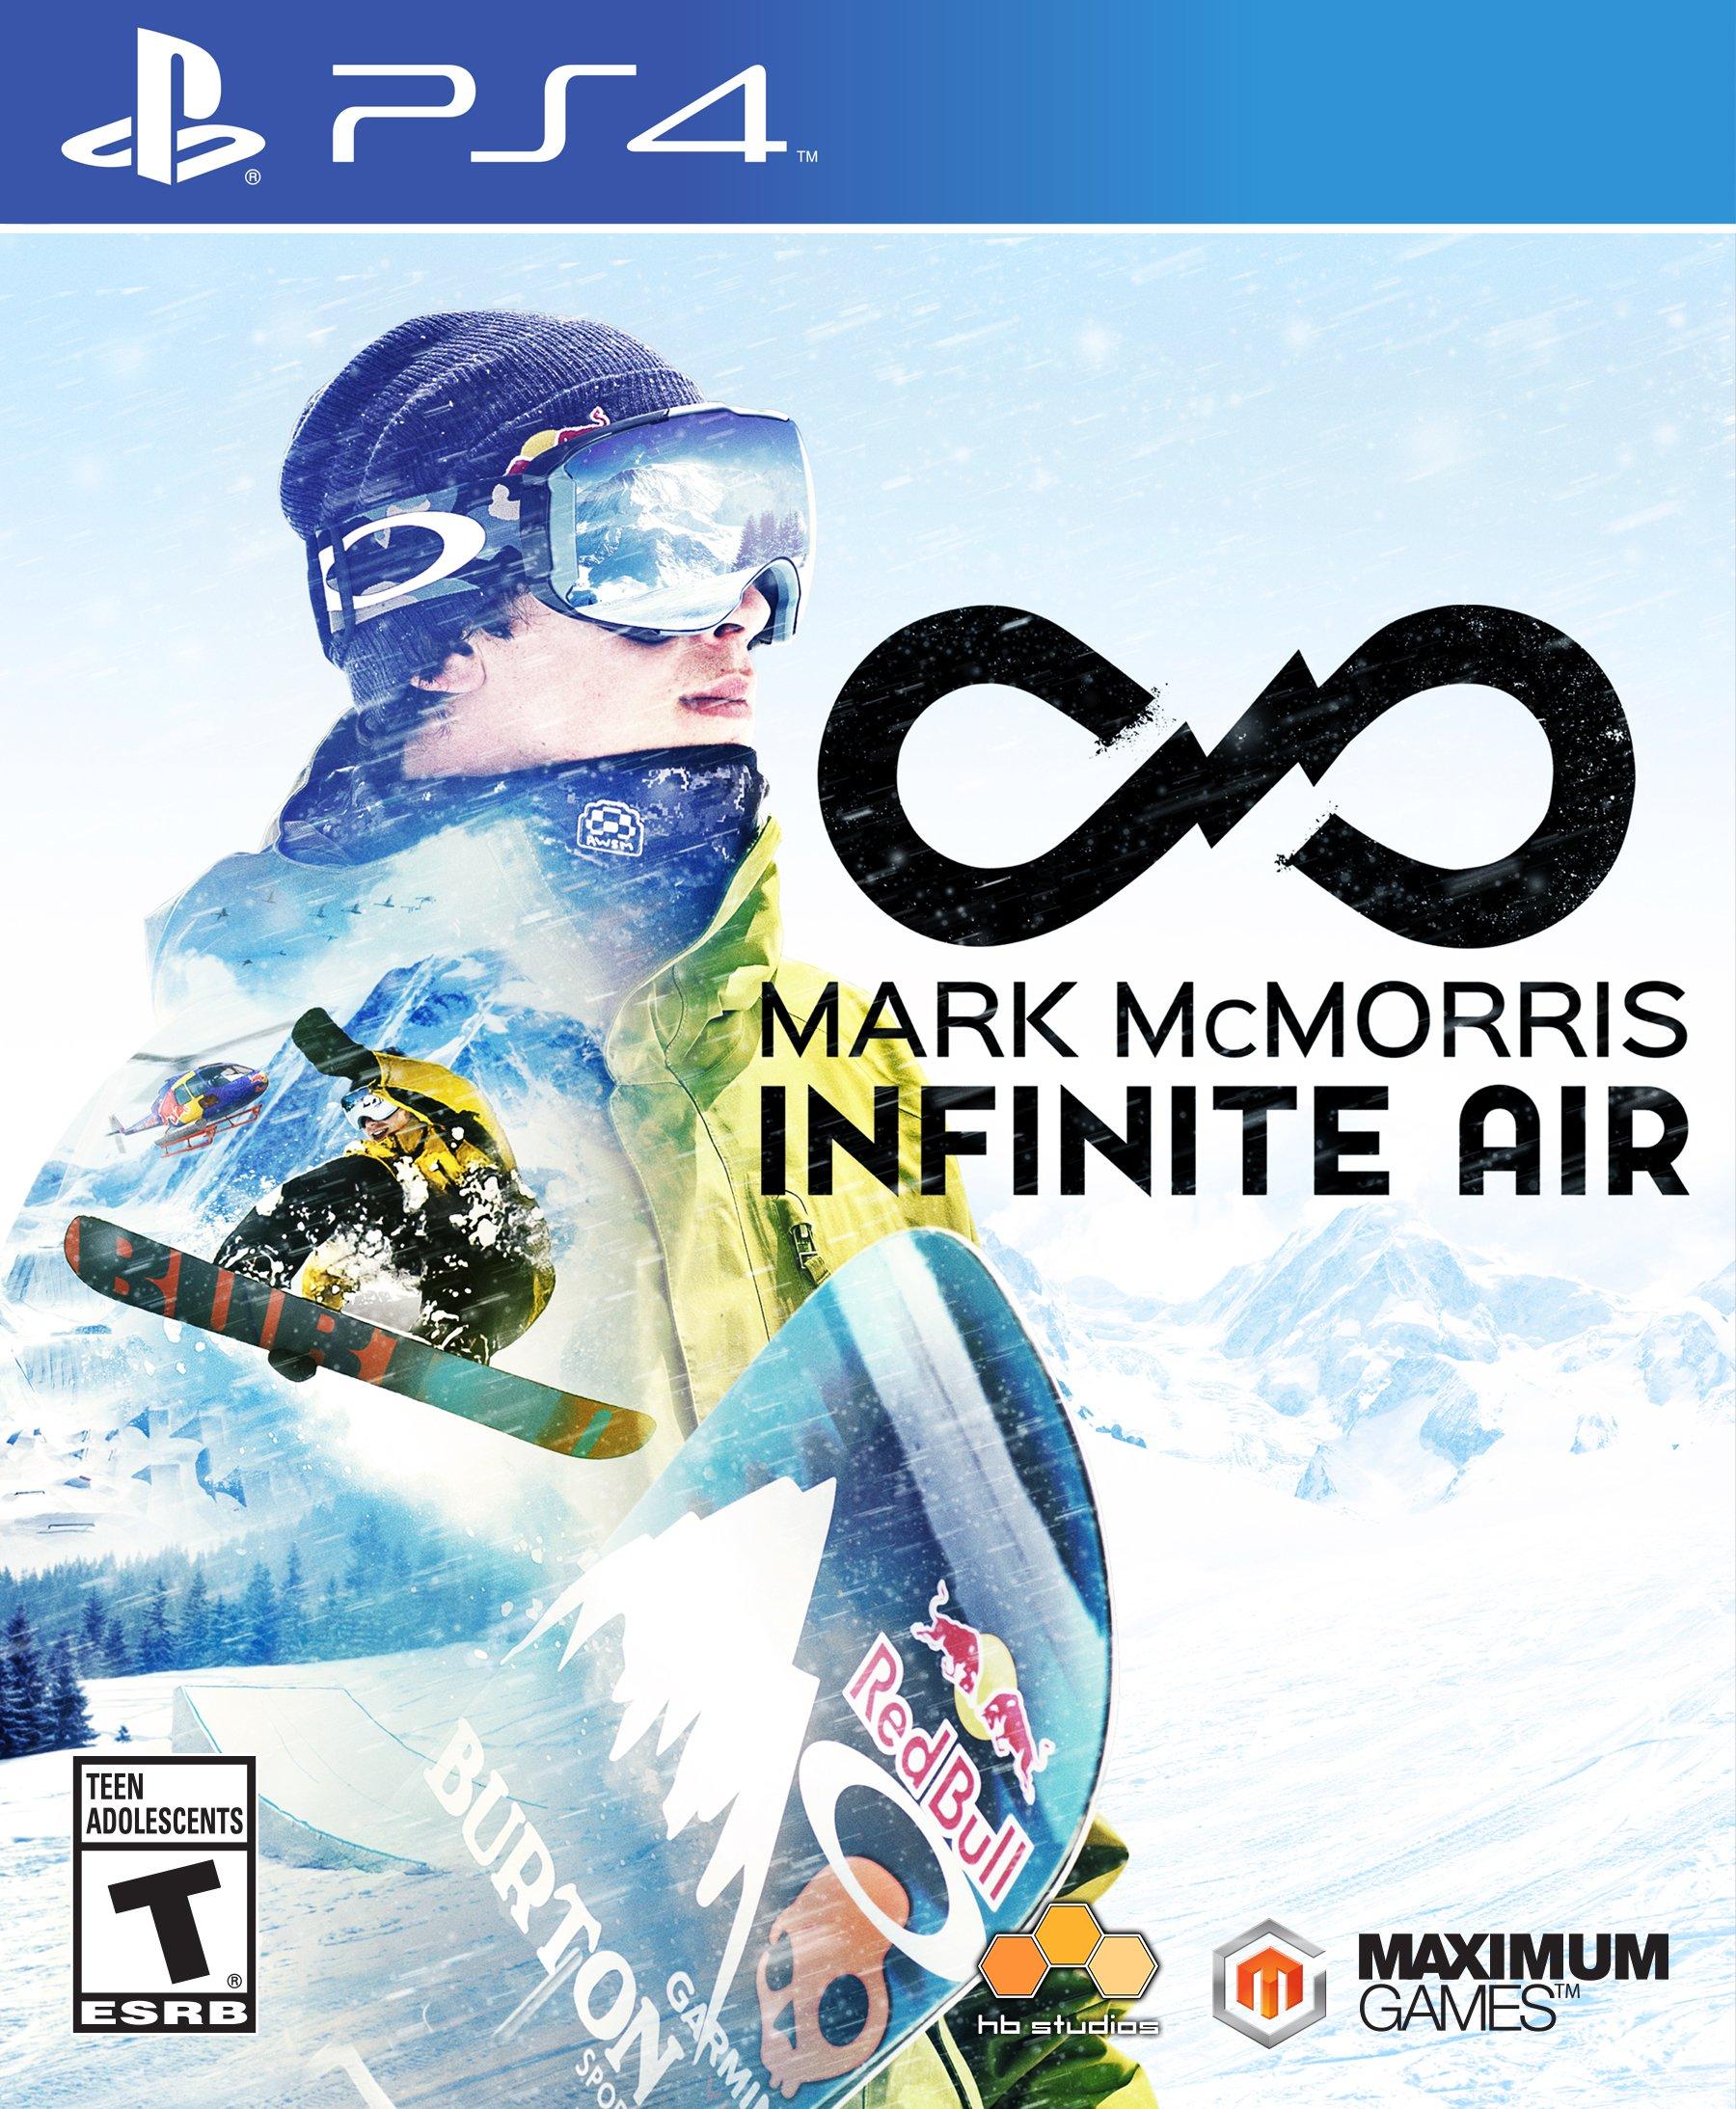 Infinite Air with Mark McMorris - PlayStation 4